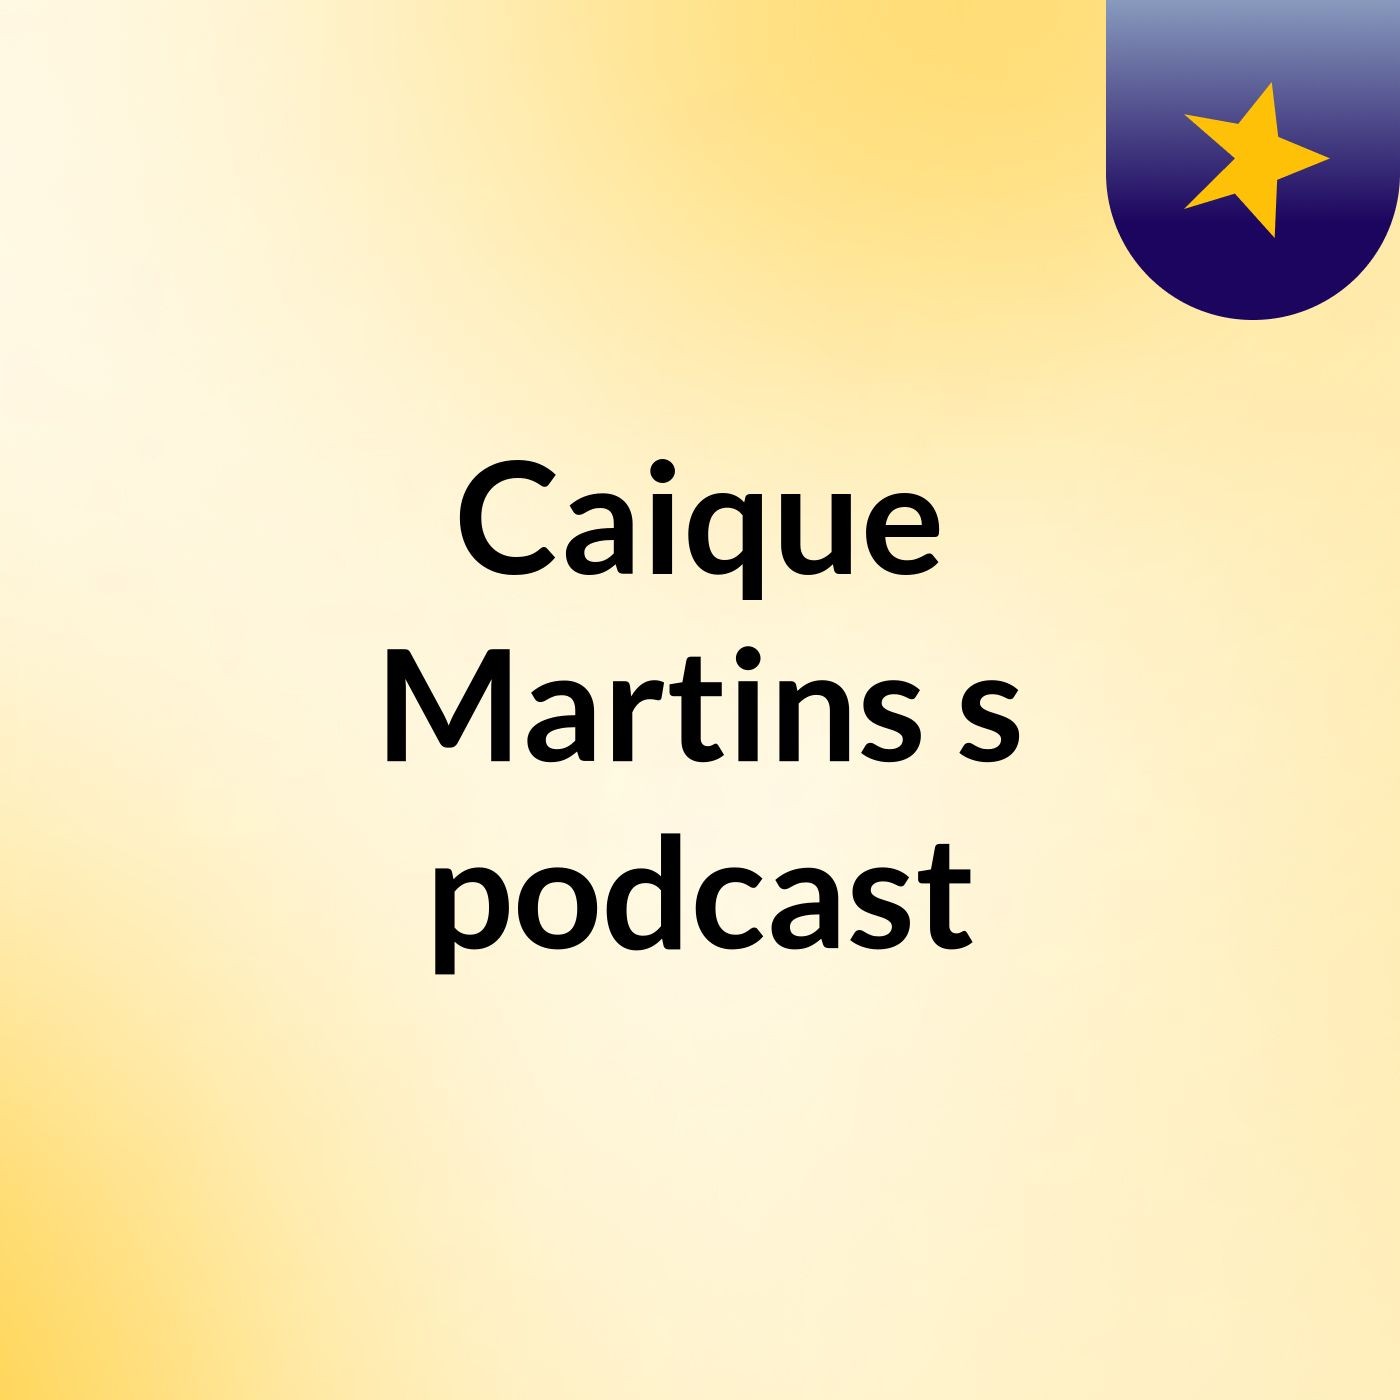 Caique Martins's podcast